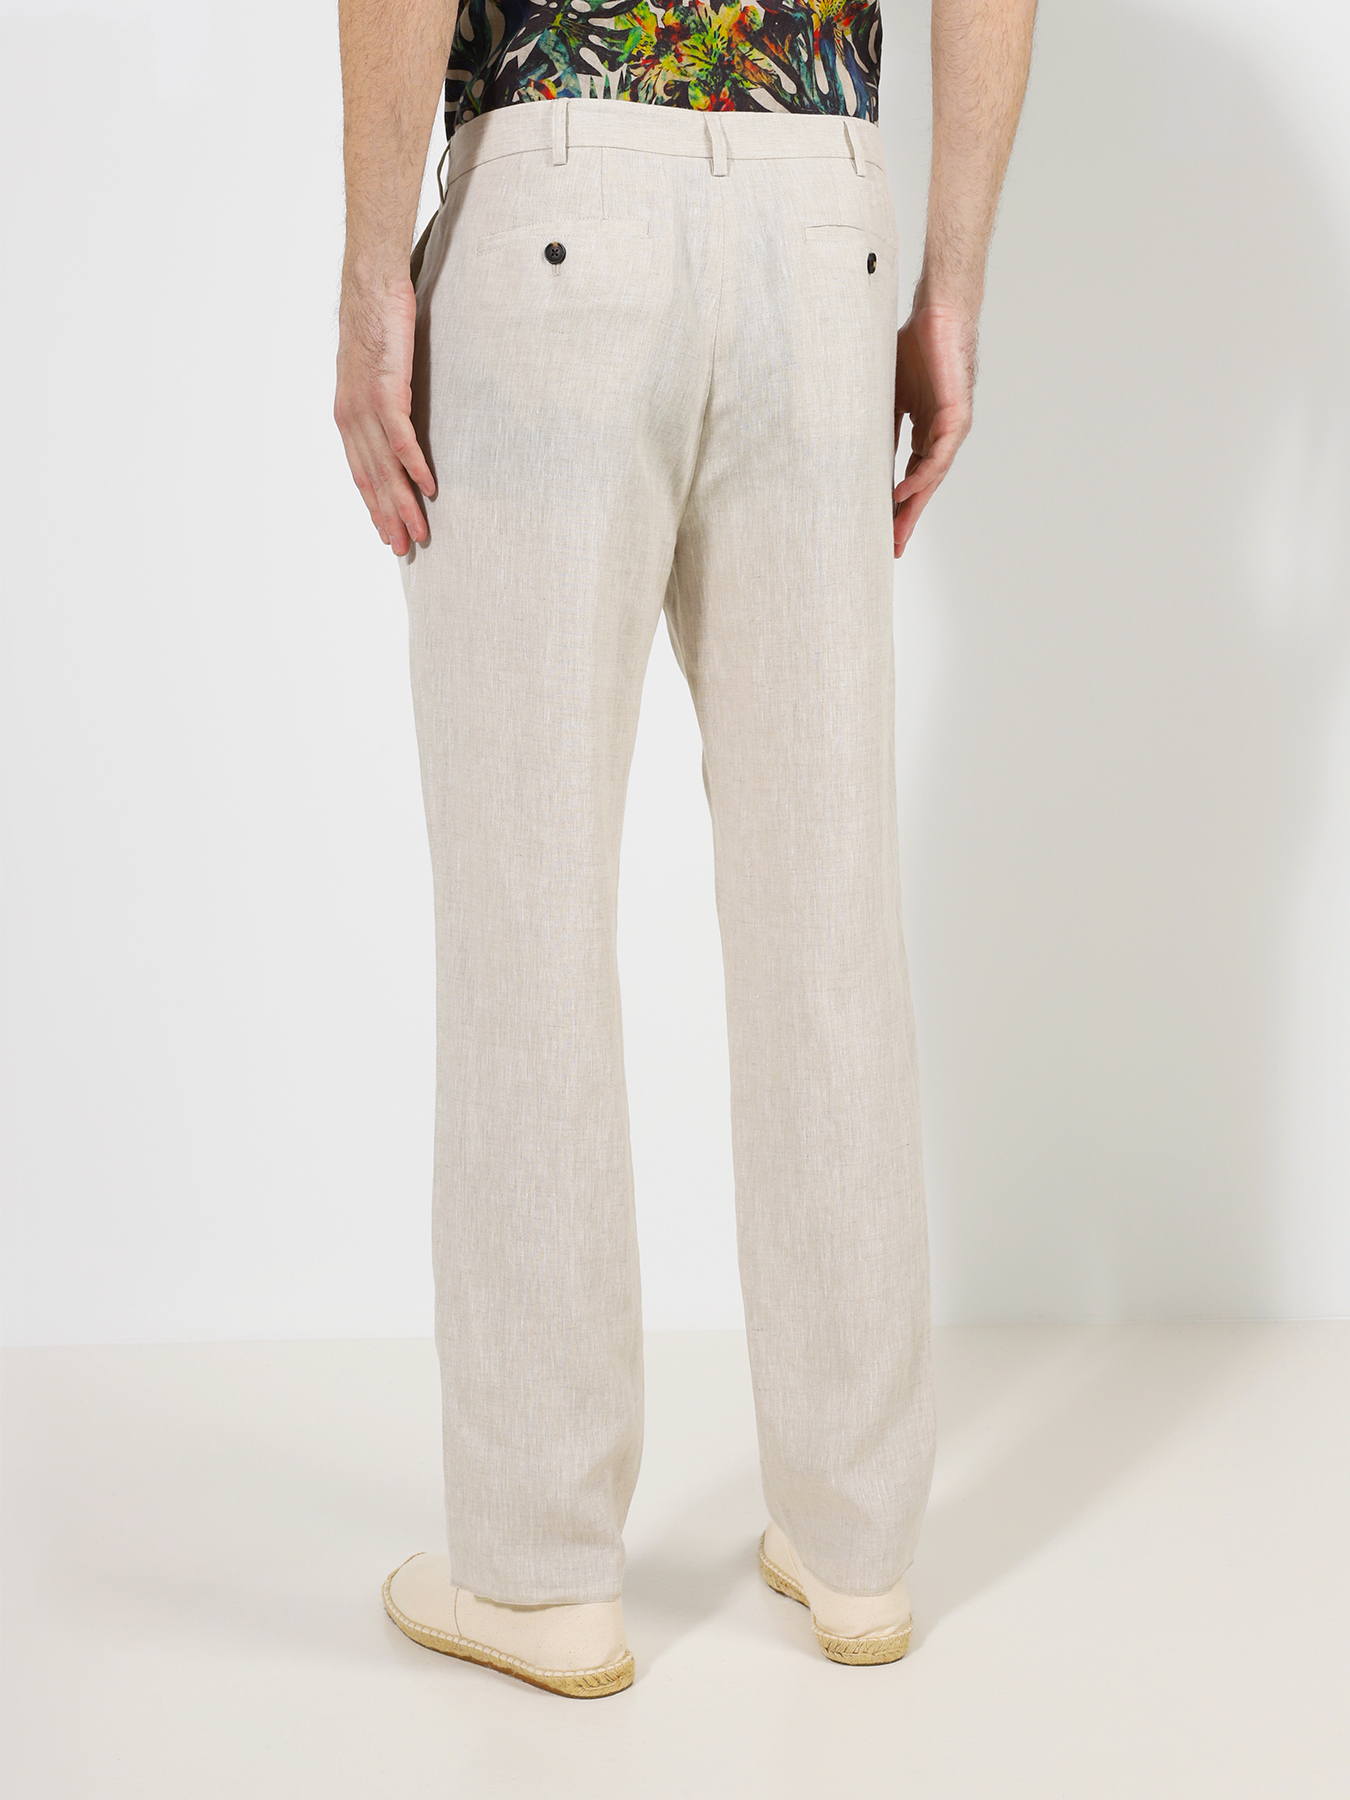 Alessandro Manzoni Jeans Льняные прямые брюки 355843-024 Фото 2